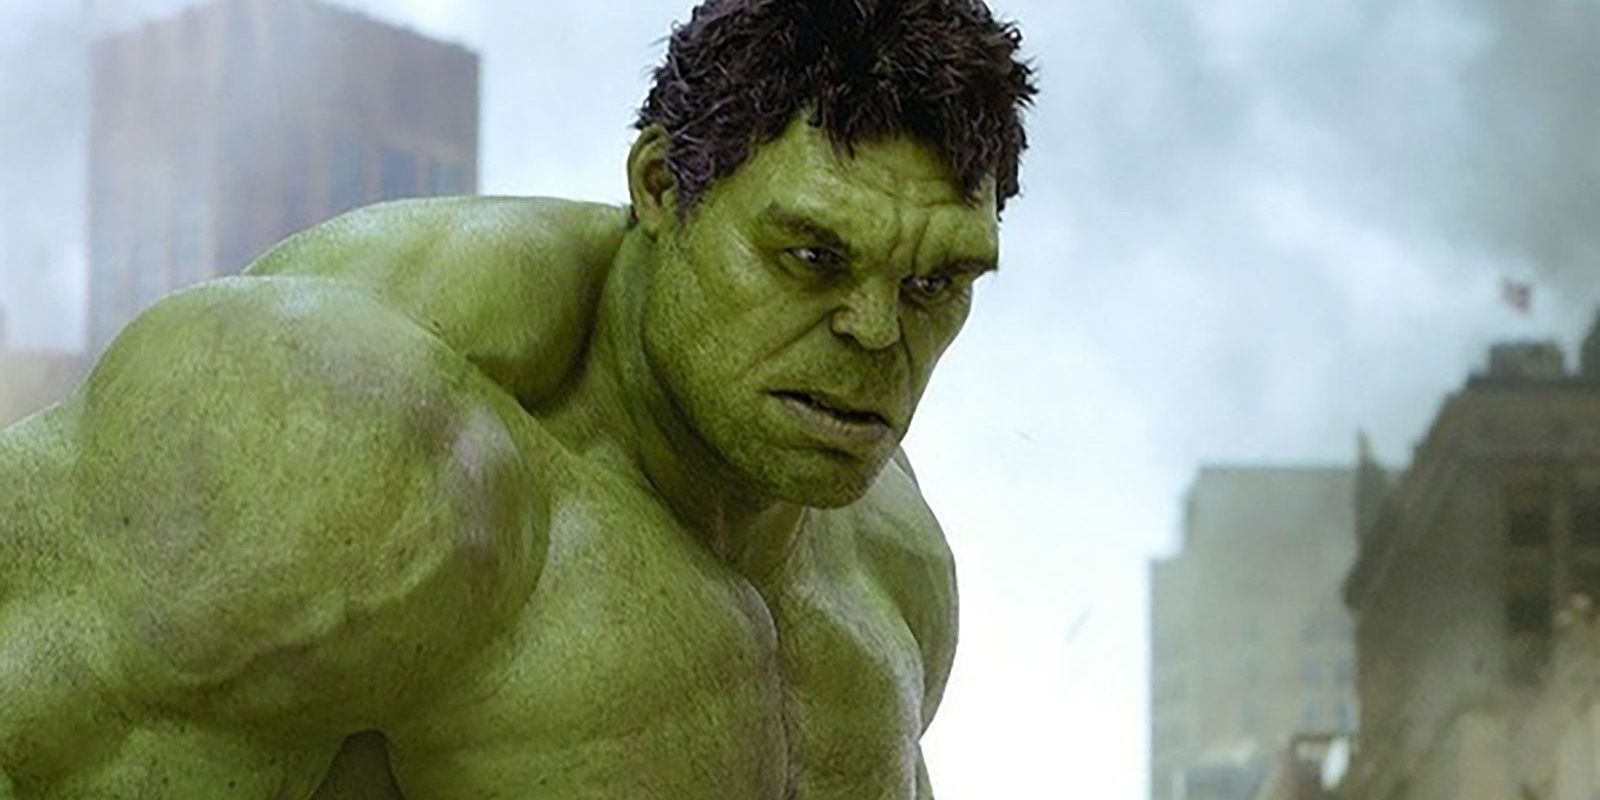 An image of Hulk